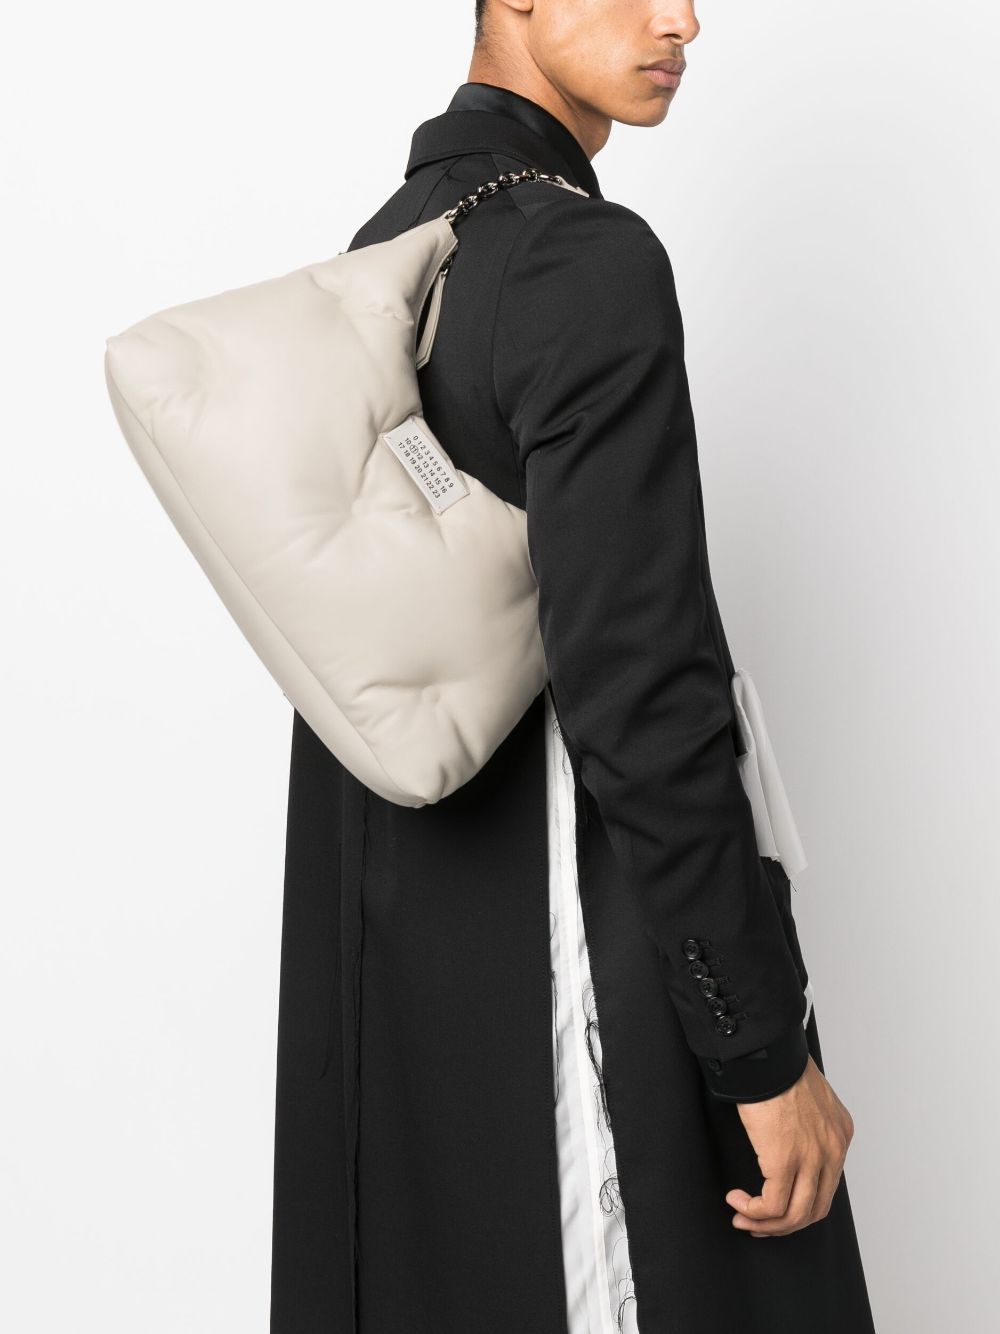 Maison Margiela Glam Slam Medium Shoulder Bag